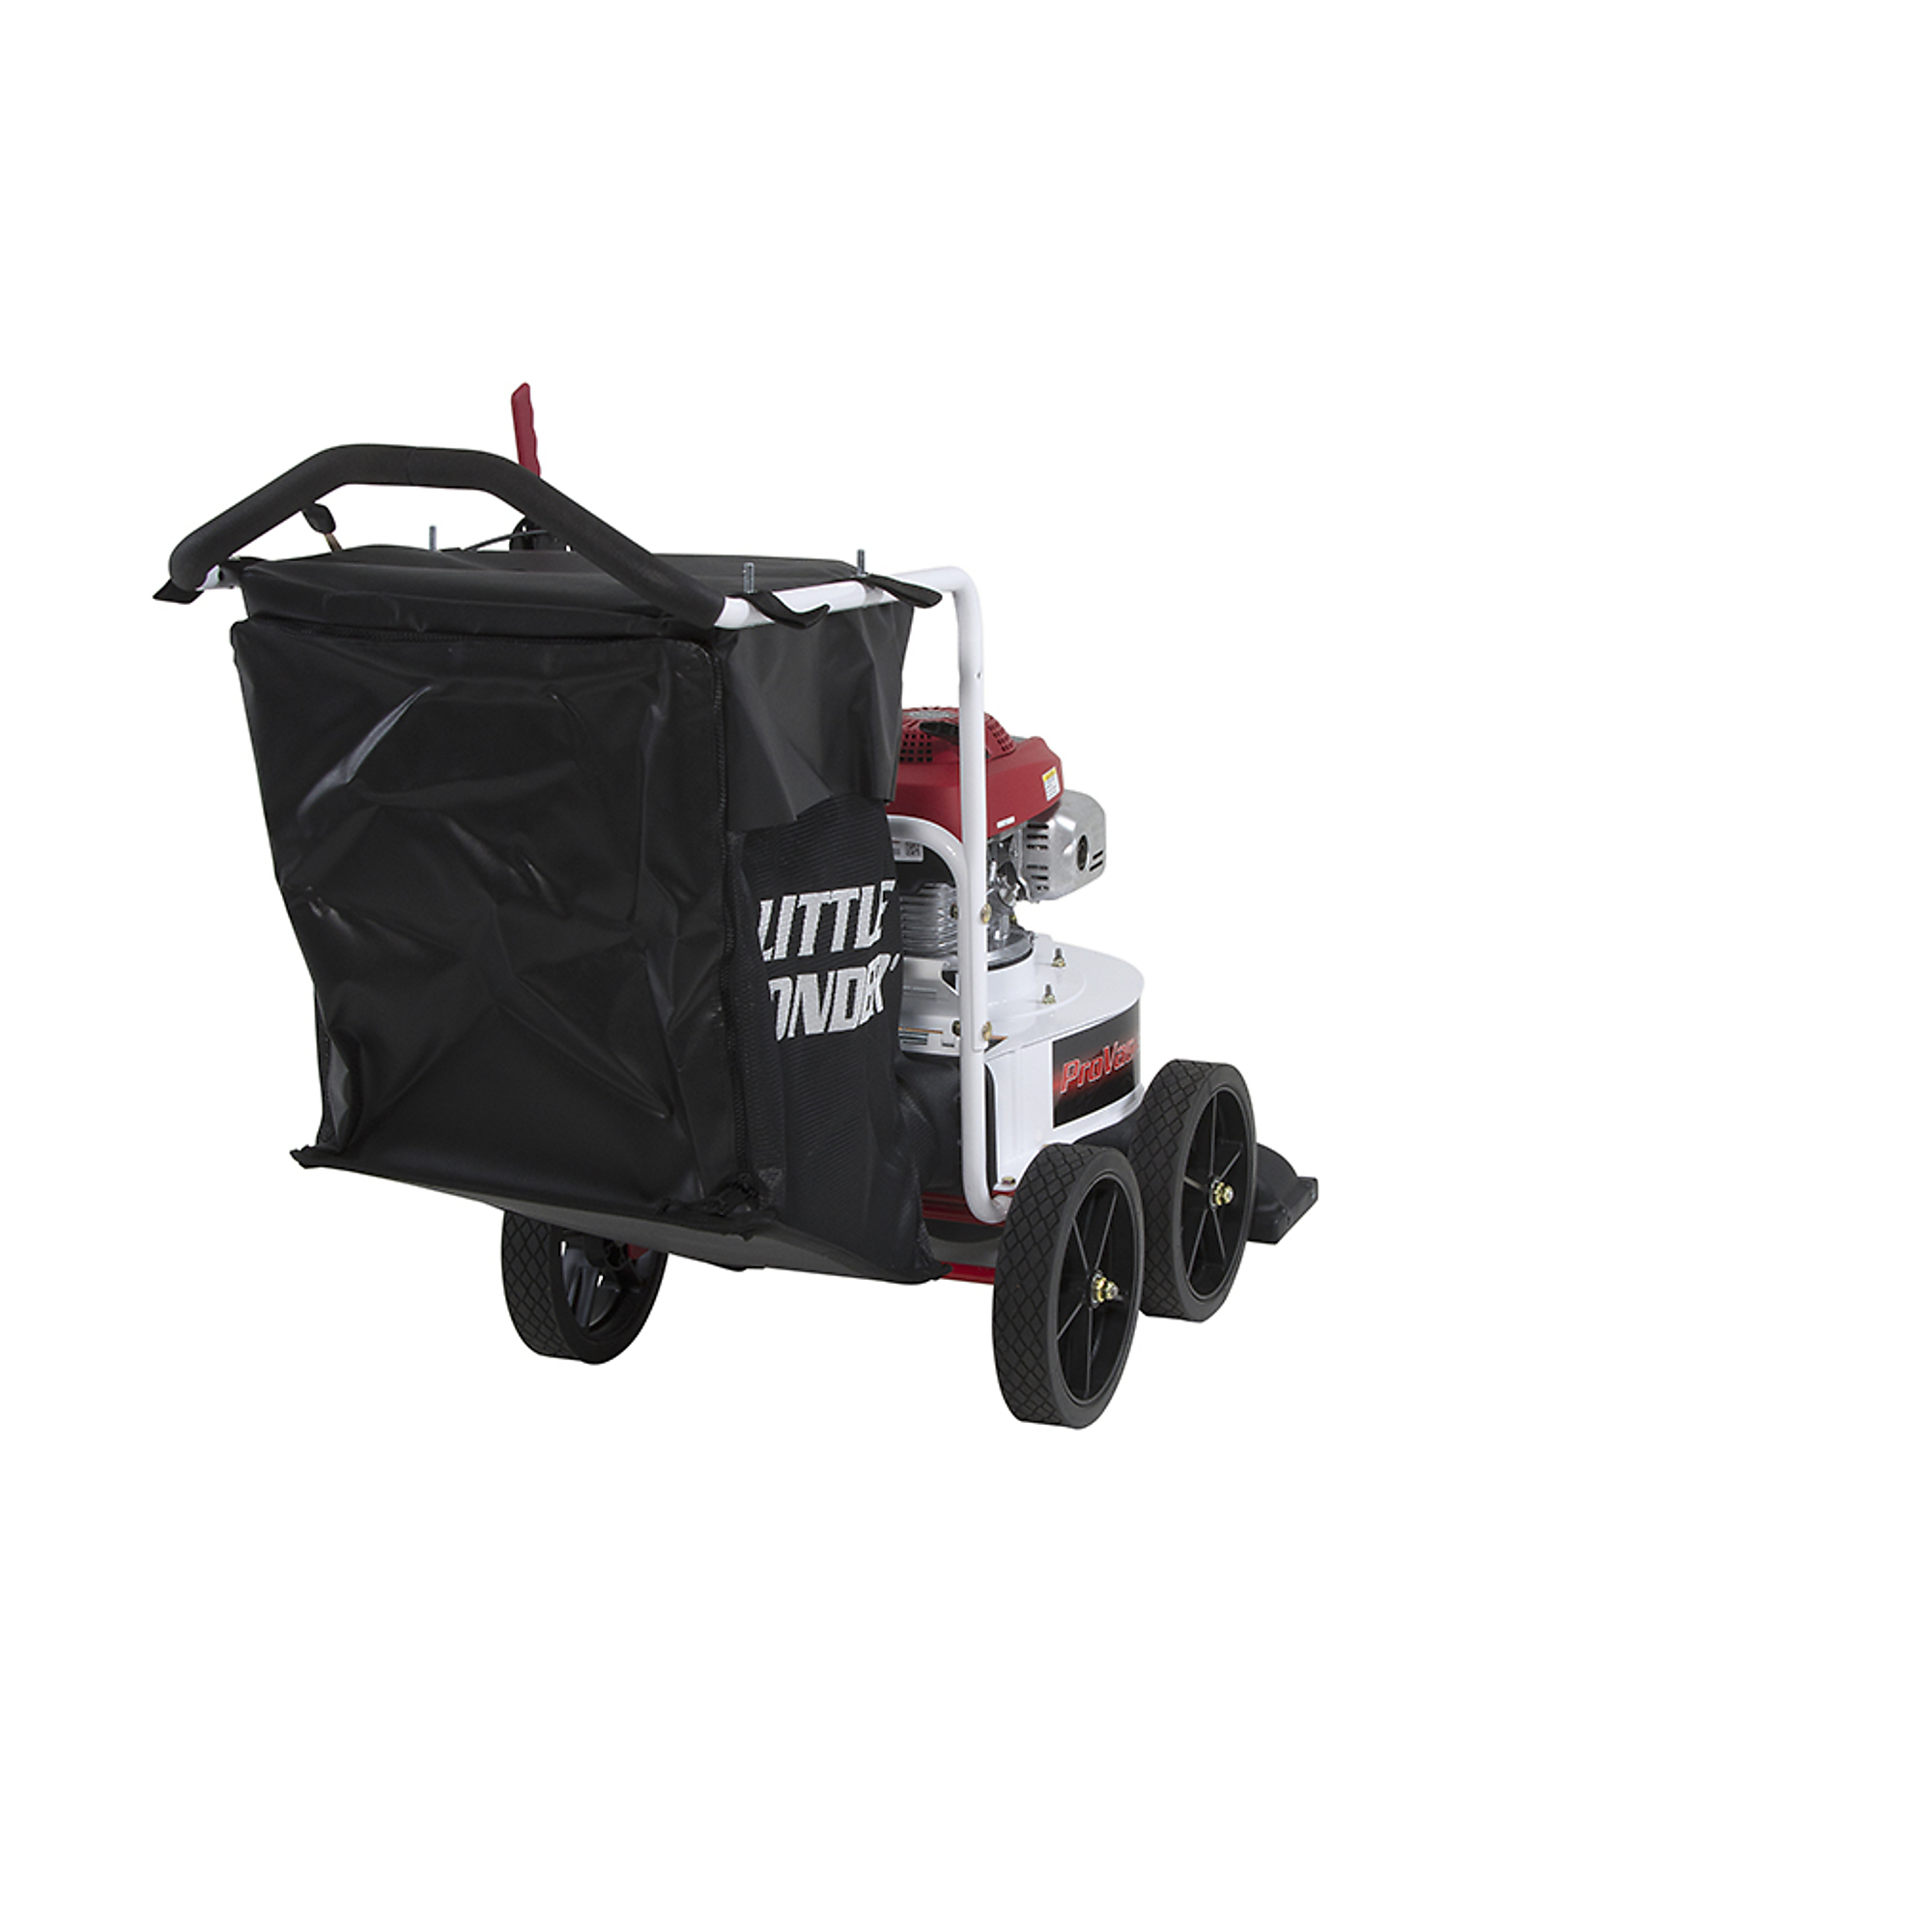 Little Wonder (27.5) 190cc Pro VAC SI Lawn/Litter Vacuum